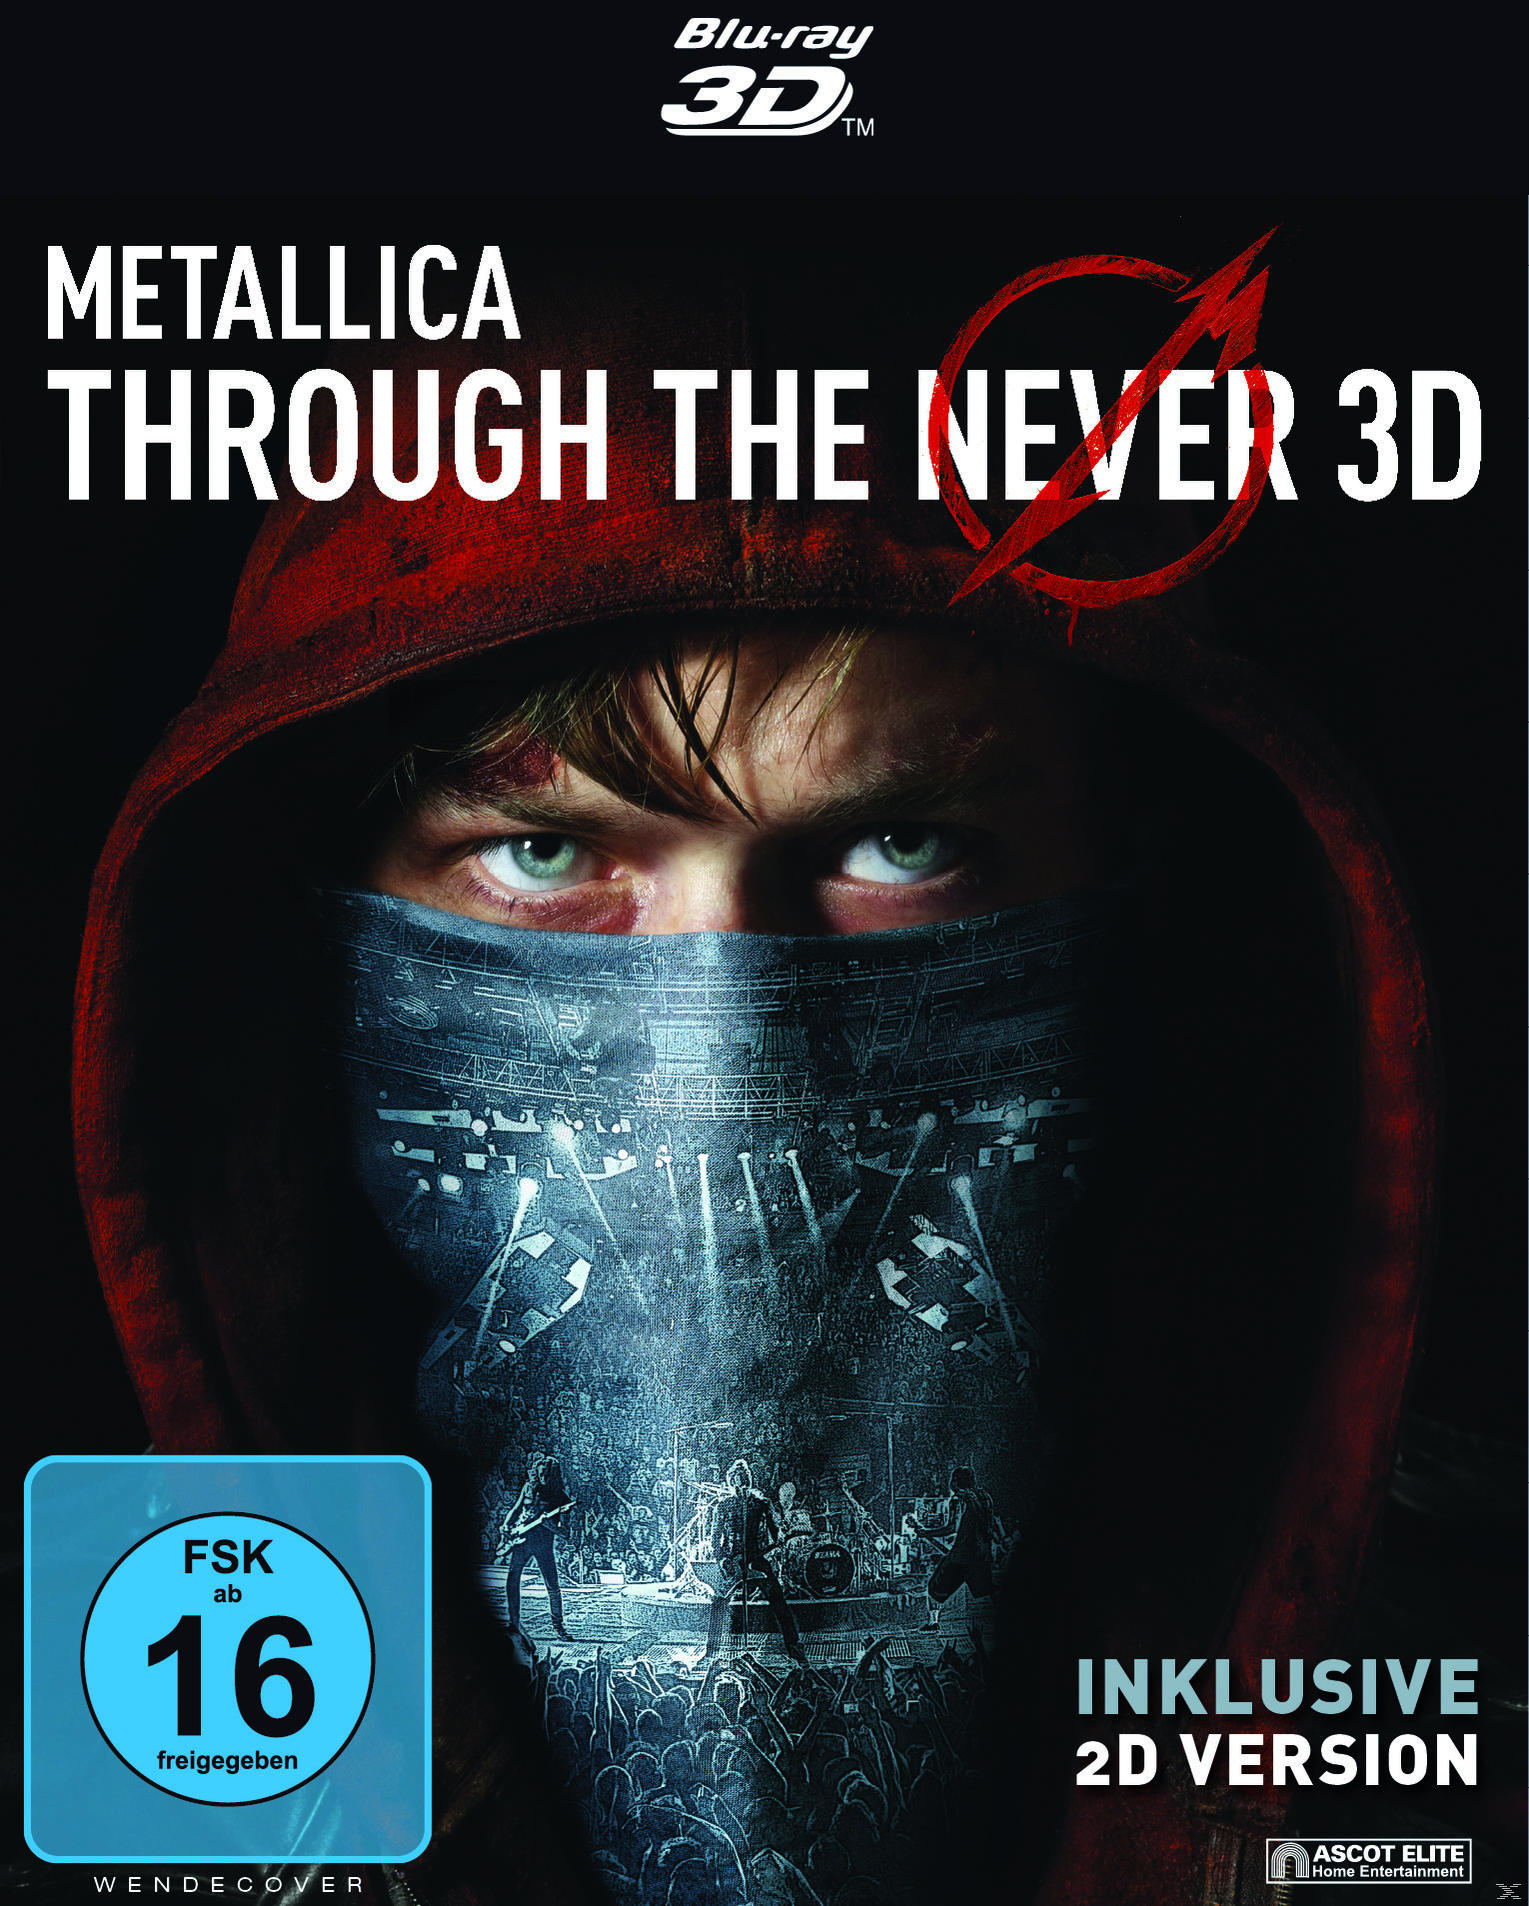 inkl. 3D Never (Blu-ray 3D - 2D) Metallica Through The Blu-ray